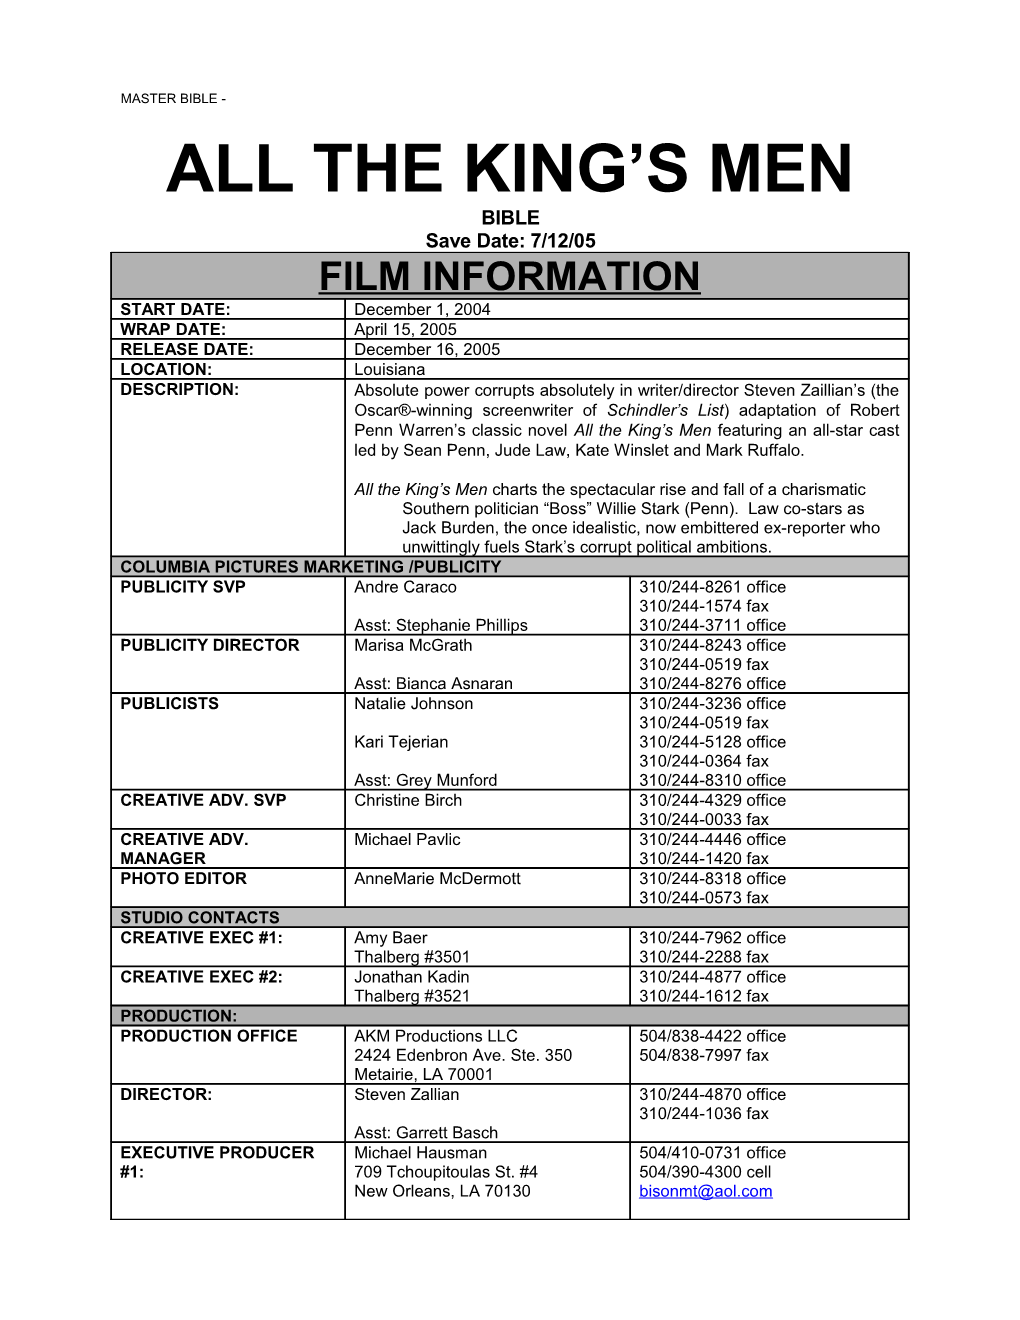 All the King S Men